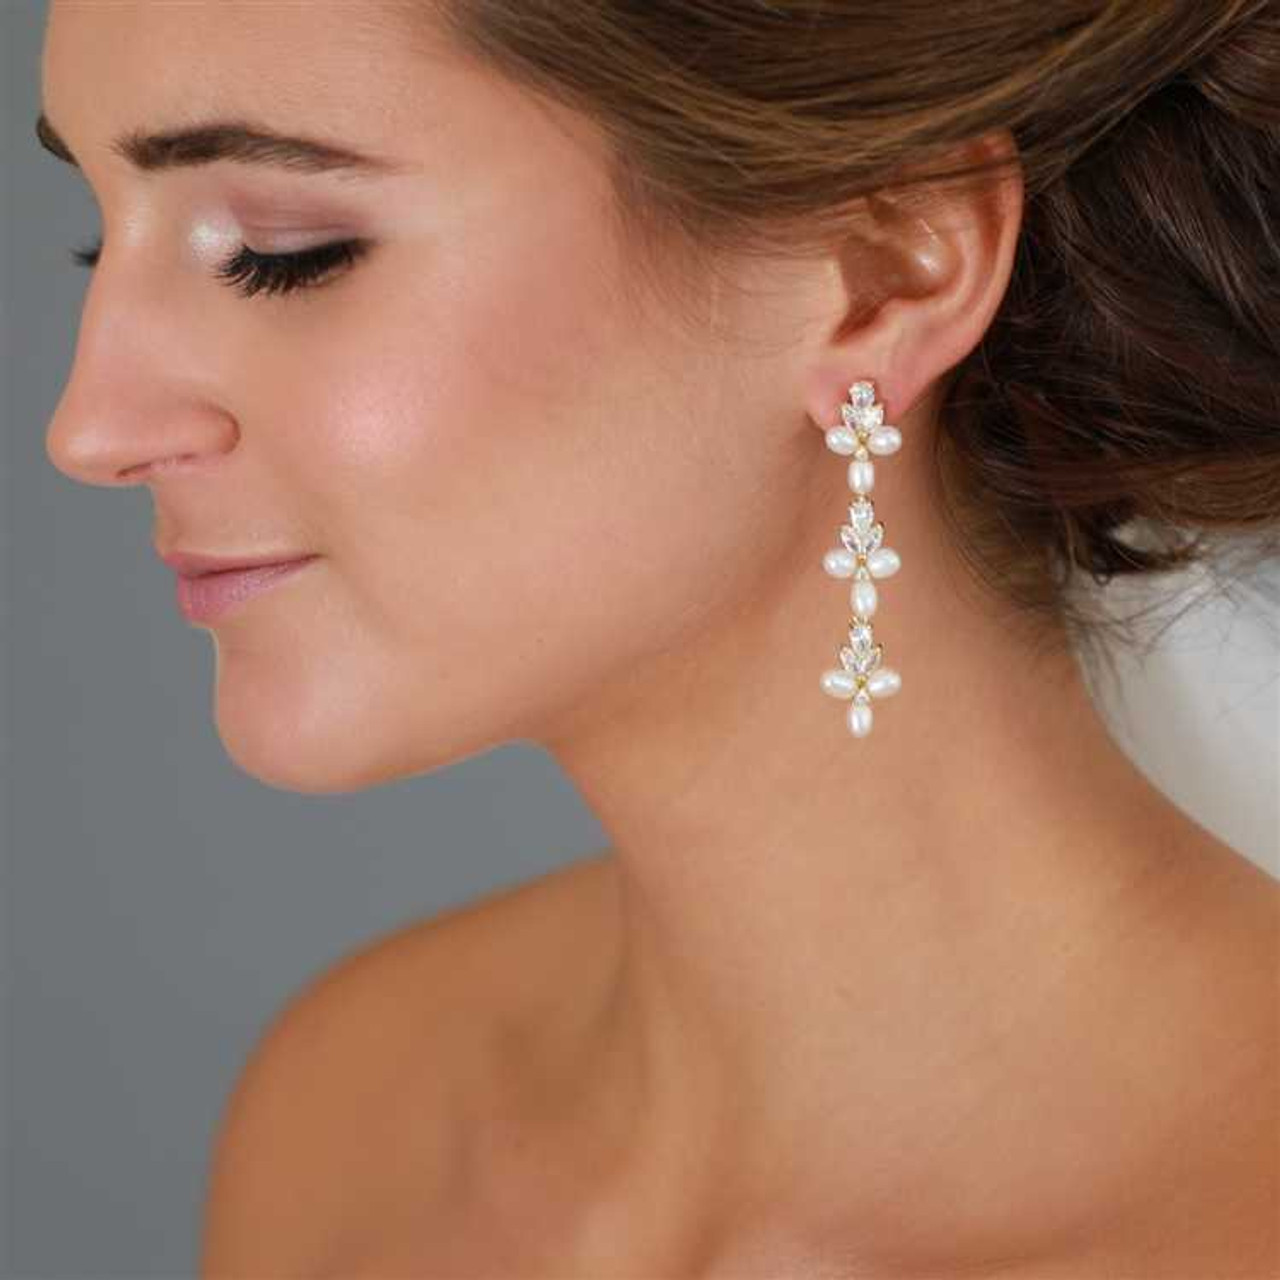 Handmade Bridal earrings, jewelry - Blossom and silk dangling earrings -  Style #2306 | Twigs & Honey ®, LLC